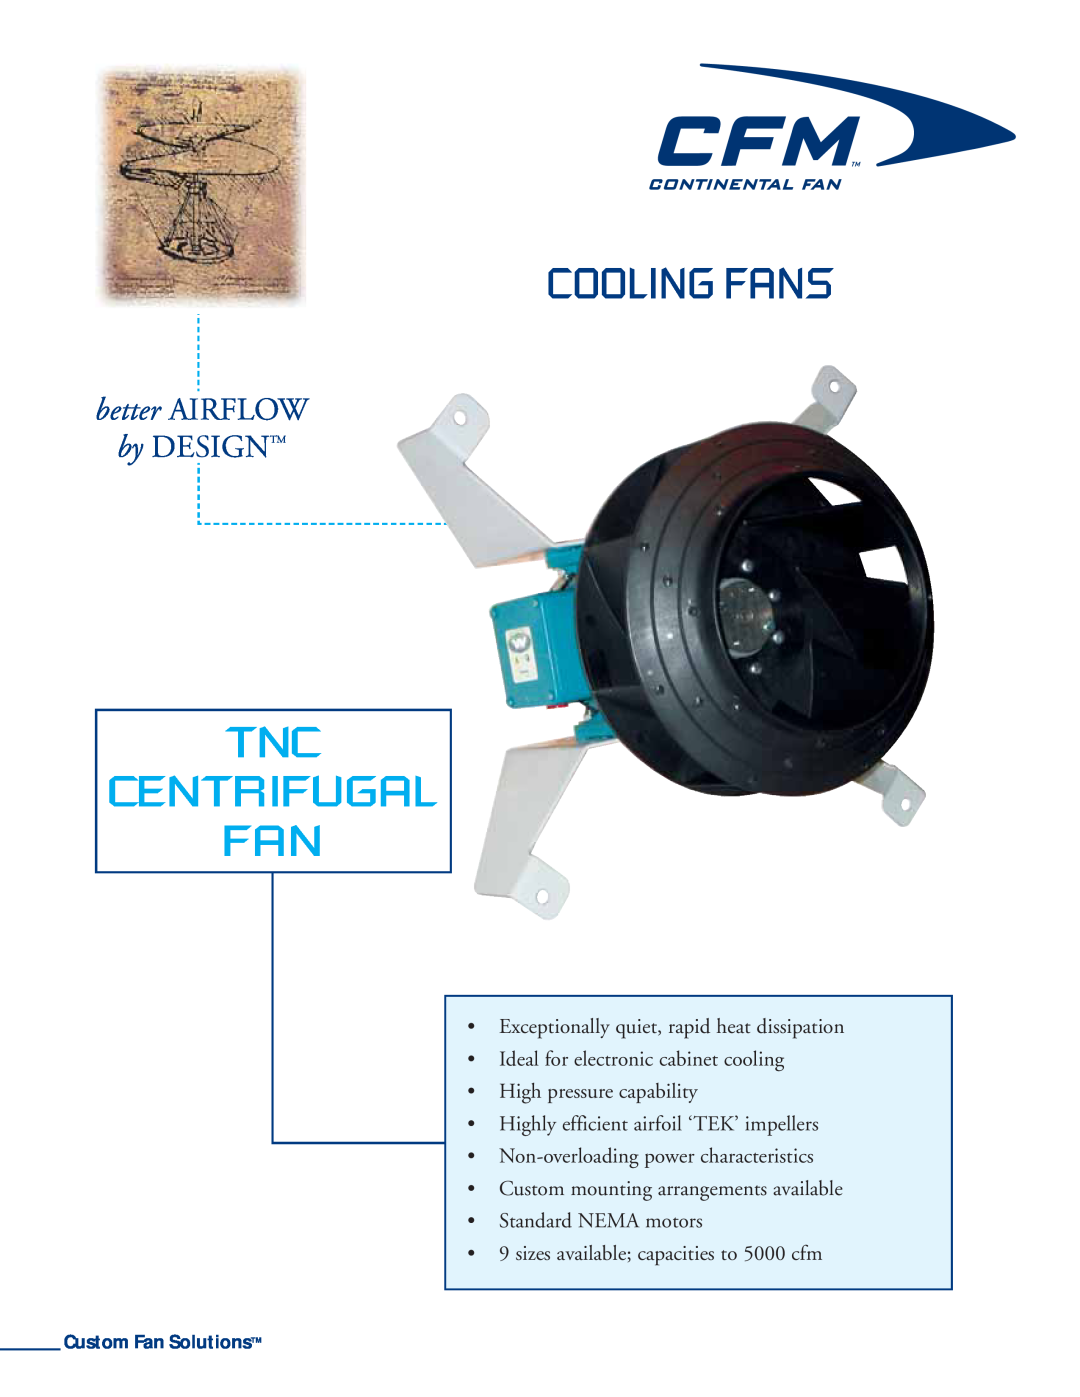 CFM TNC280-2 manual Cooling Fans, Tnc Centrifugal Fan, better AIRFLOW, by DESIGNTM, Non-overloading power characteristics 